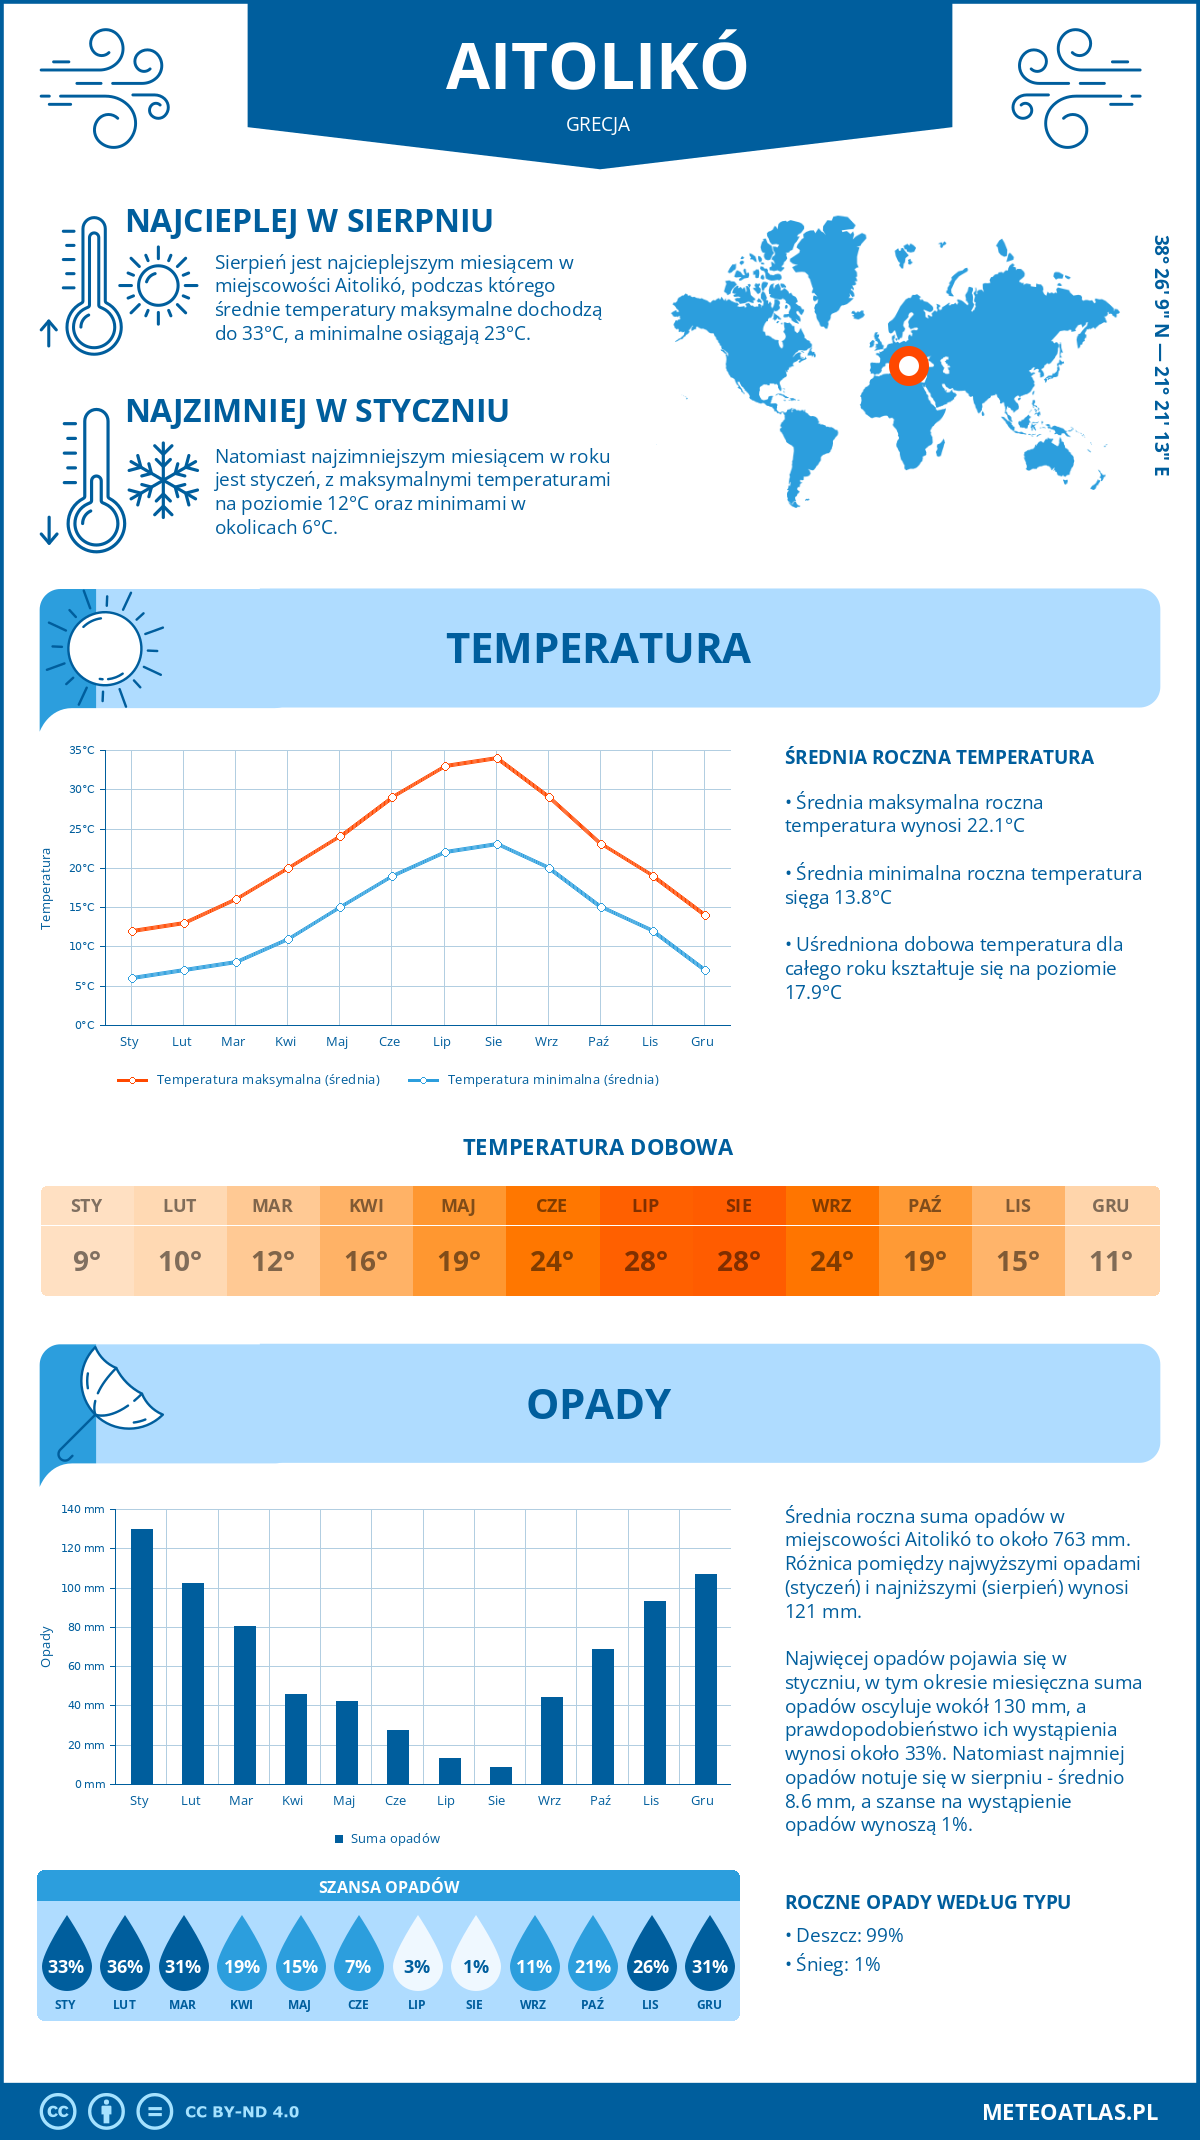 Pogoda Etoliko (Grecja). Temperatura oraz opady.